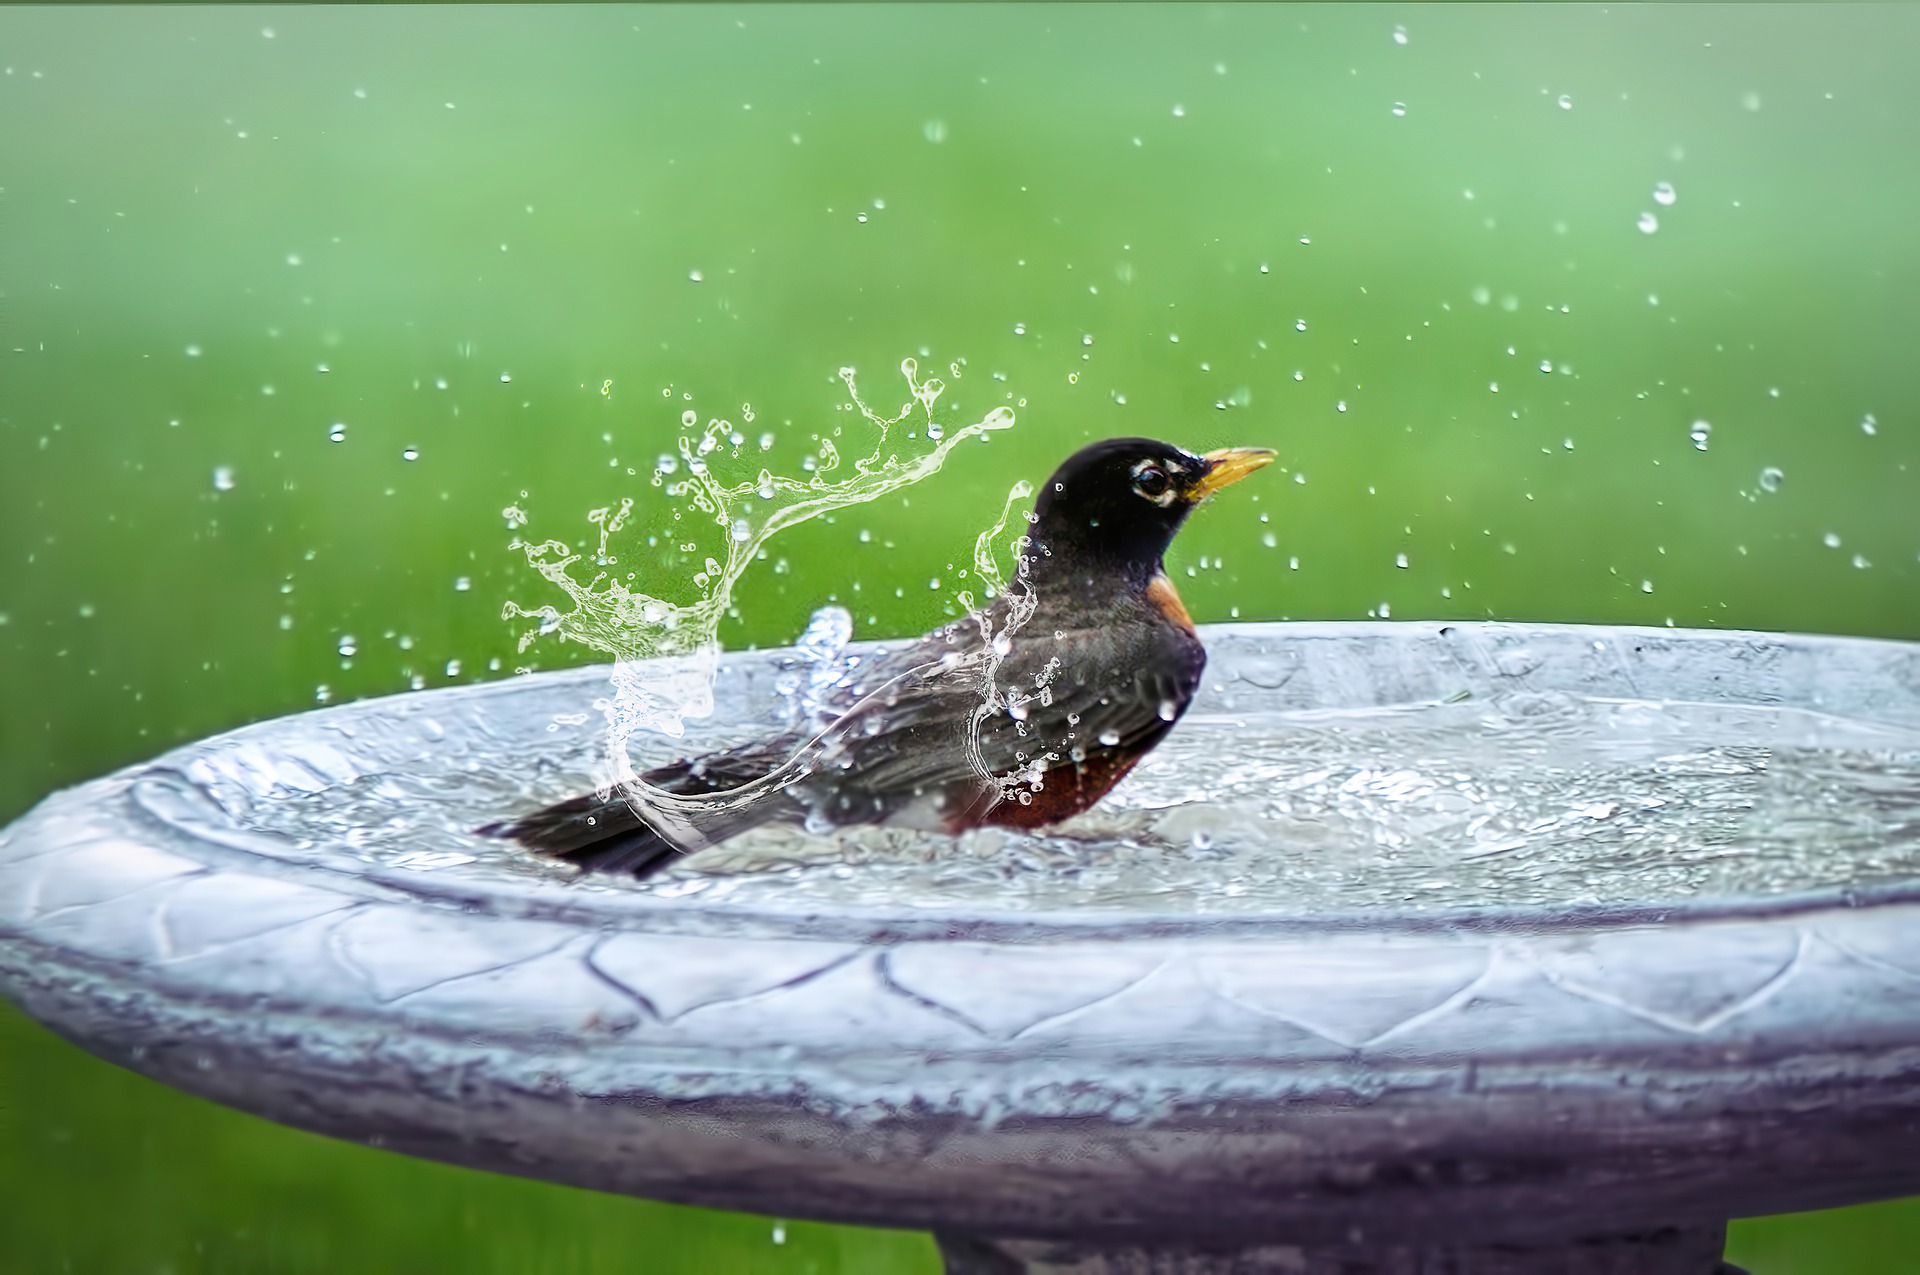 A black bird cools off as he bathes in a birdbath